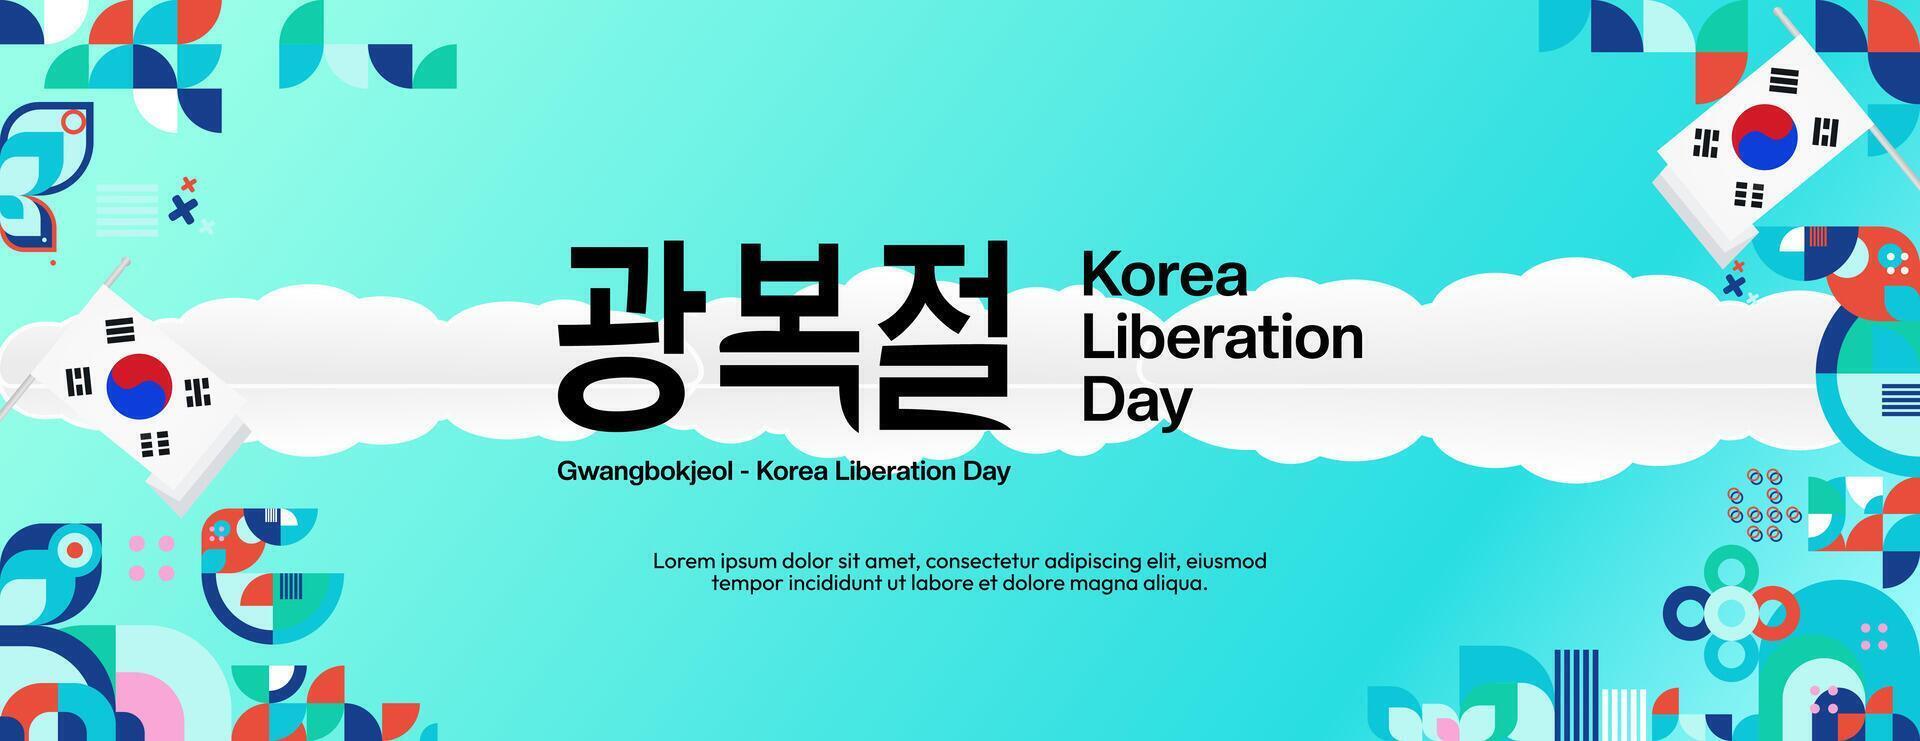 Corea nacional liberación día amplio bandera en vistoso moderno geométrico estilo. contento gwangbokjeol día es sur coreano independencia día. vector ilustración para nacional fiesta celebrar